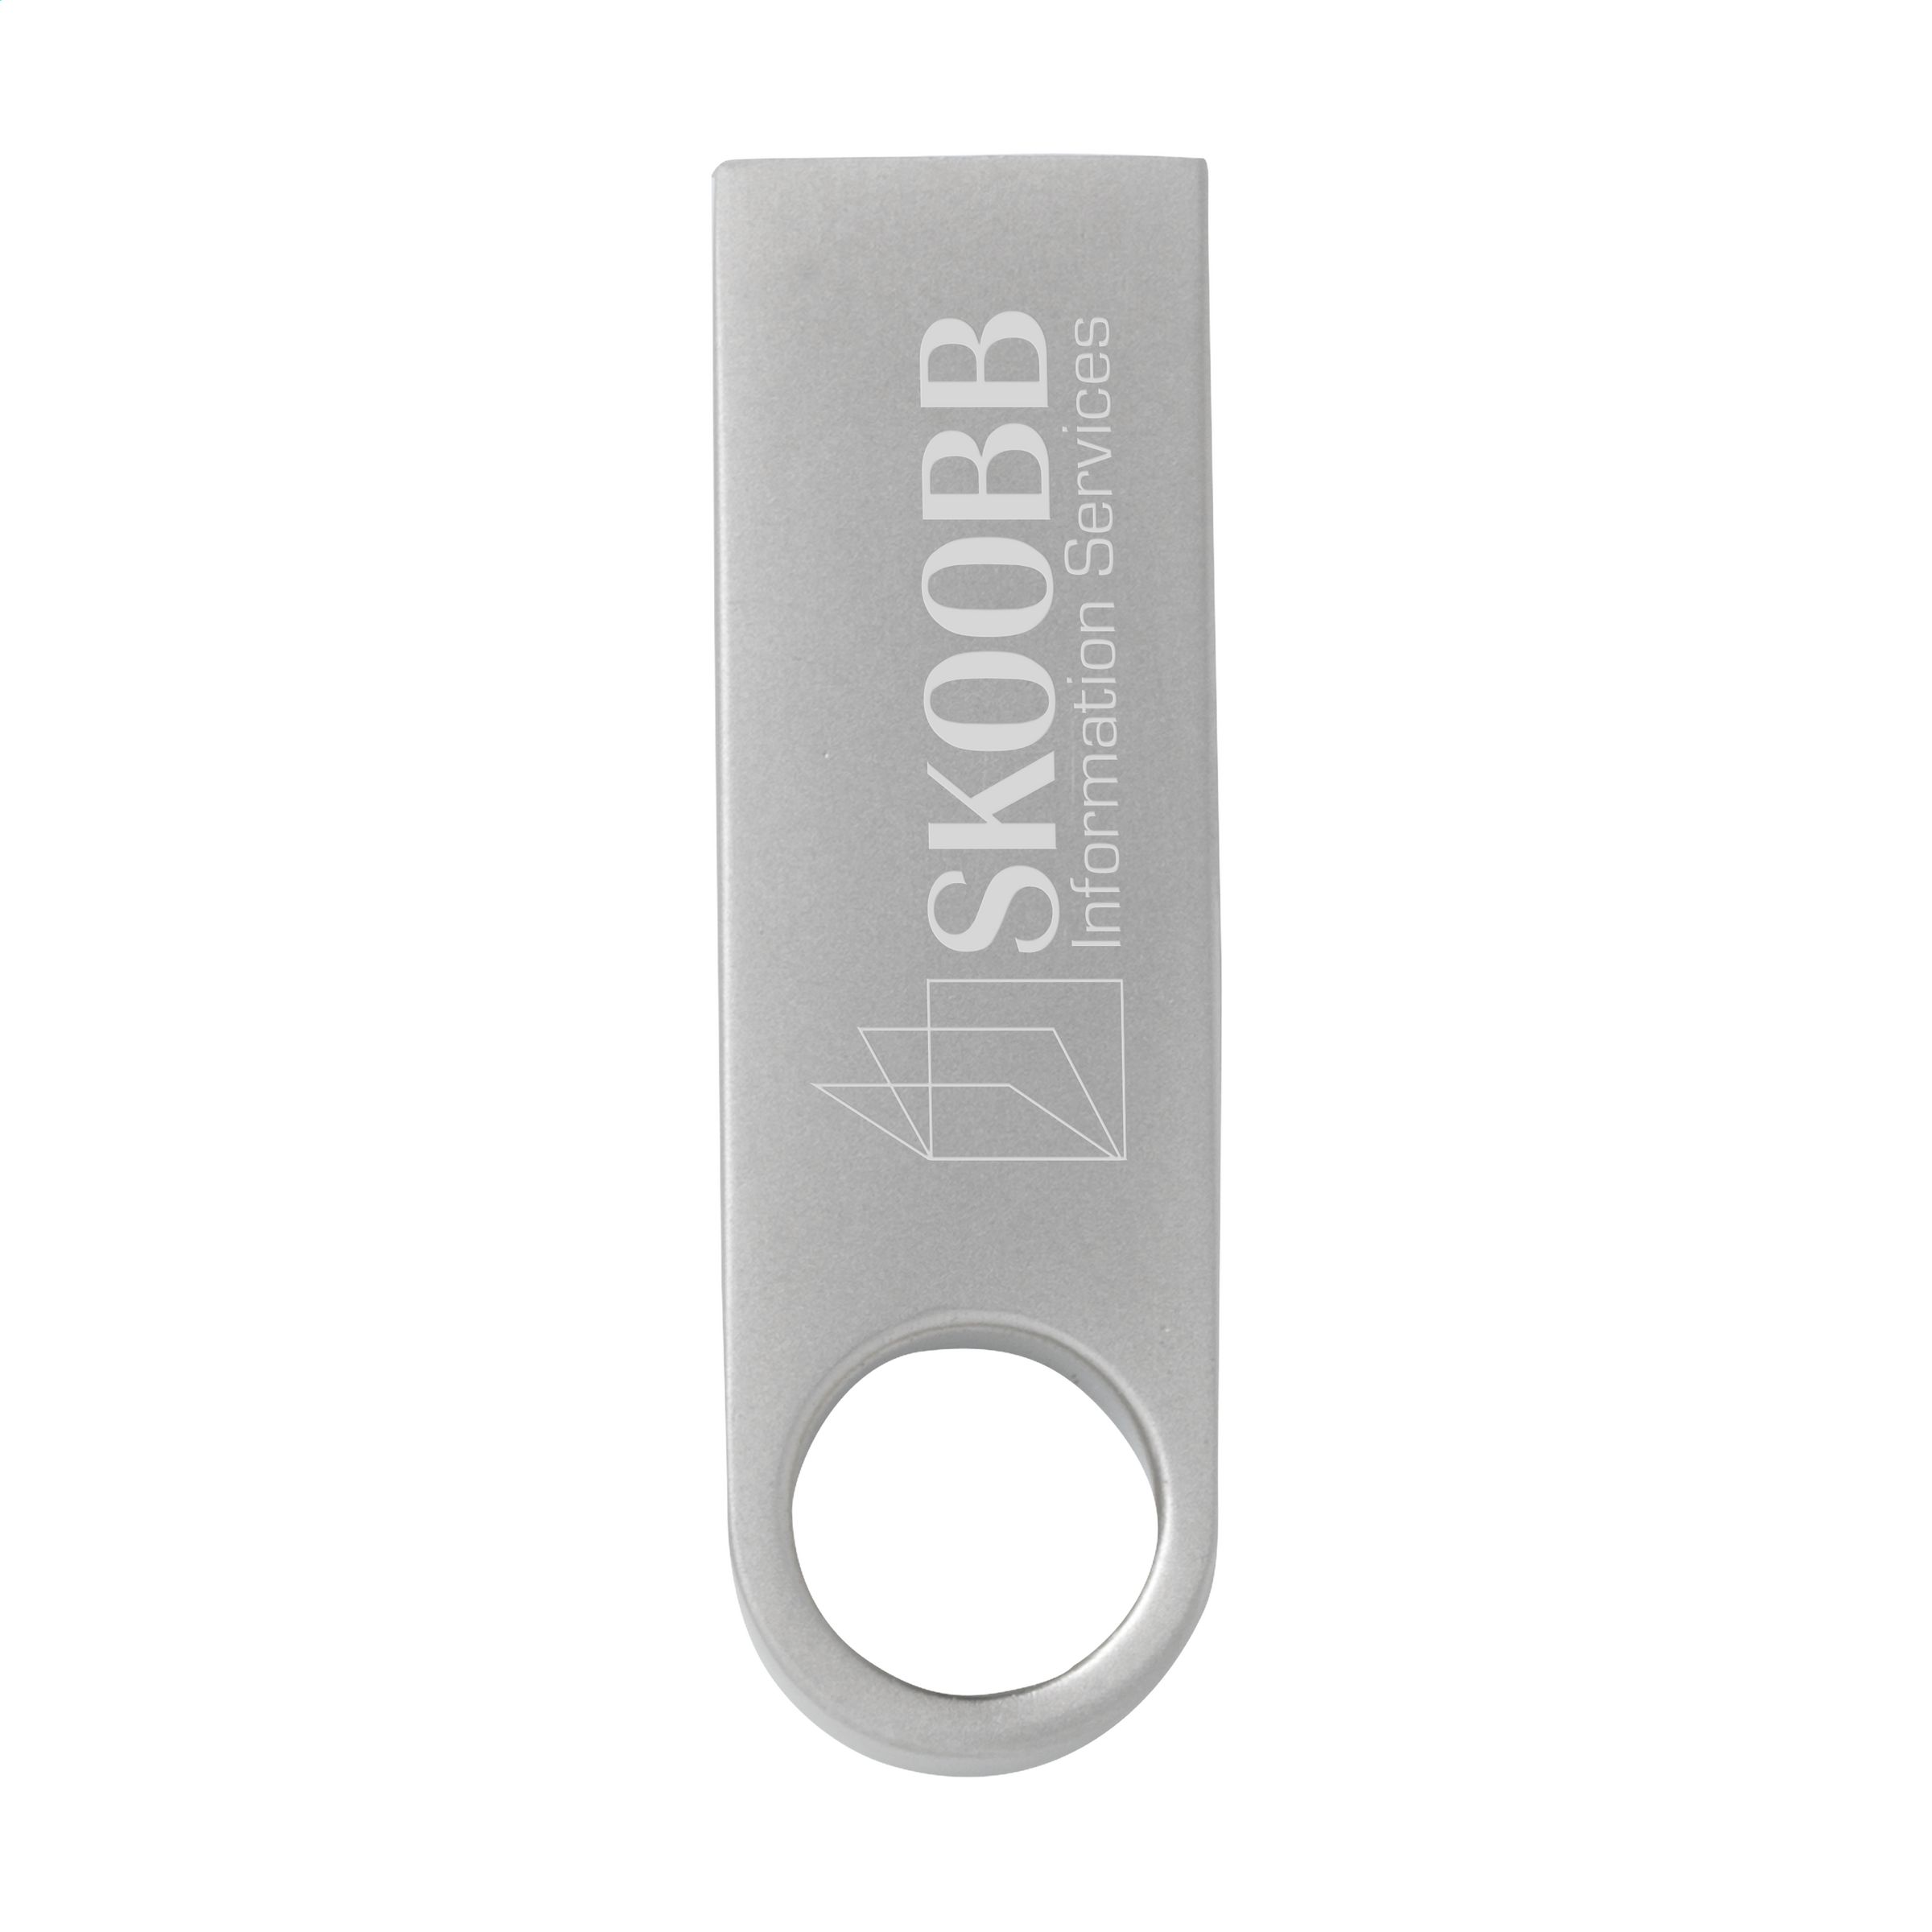 SilverSteel USB - Piddinghoe - Andújar